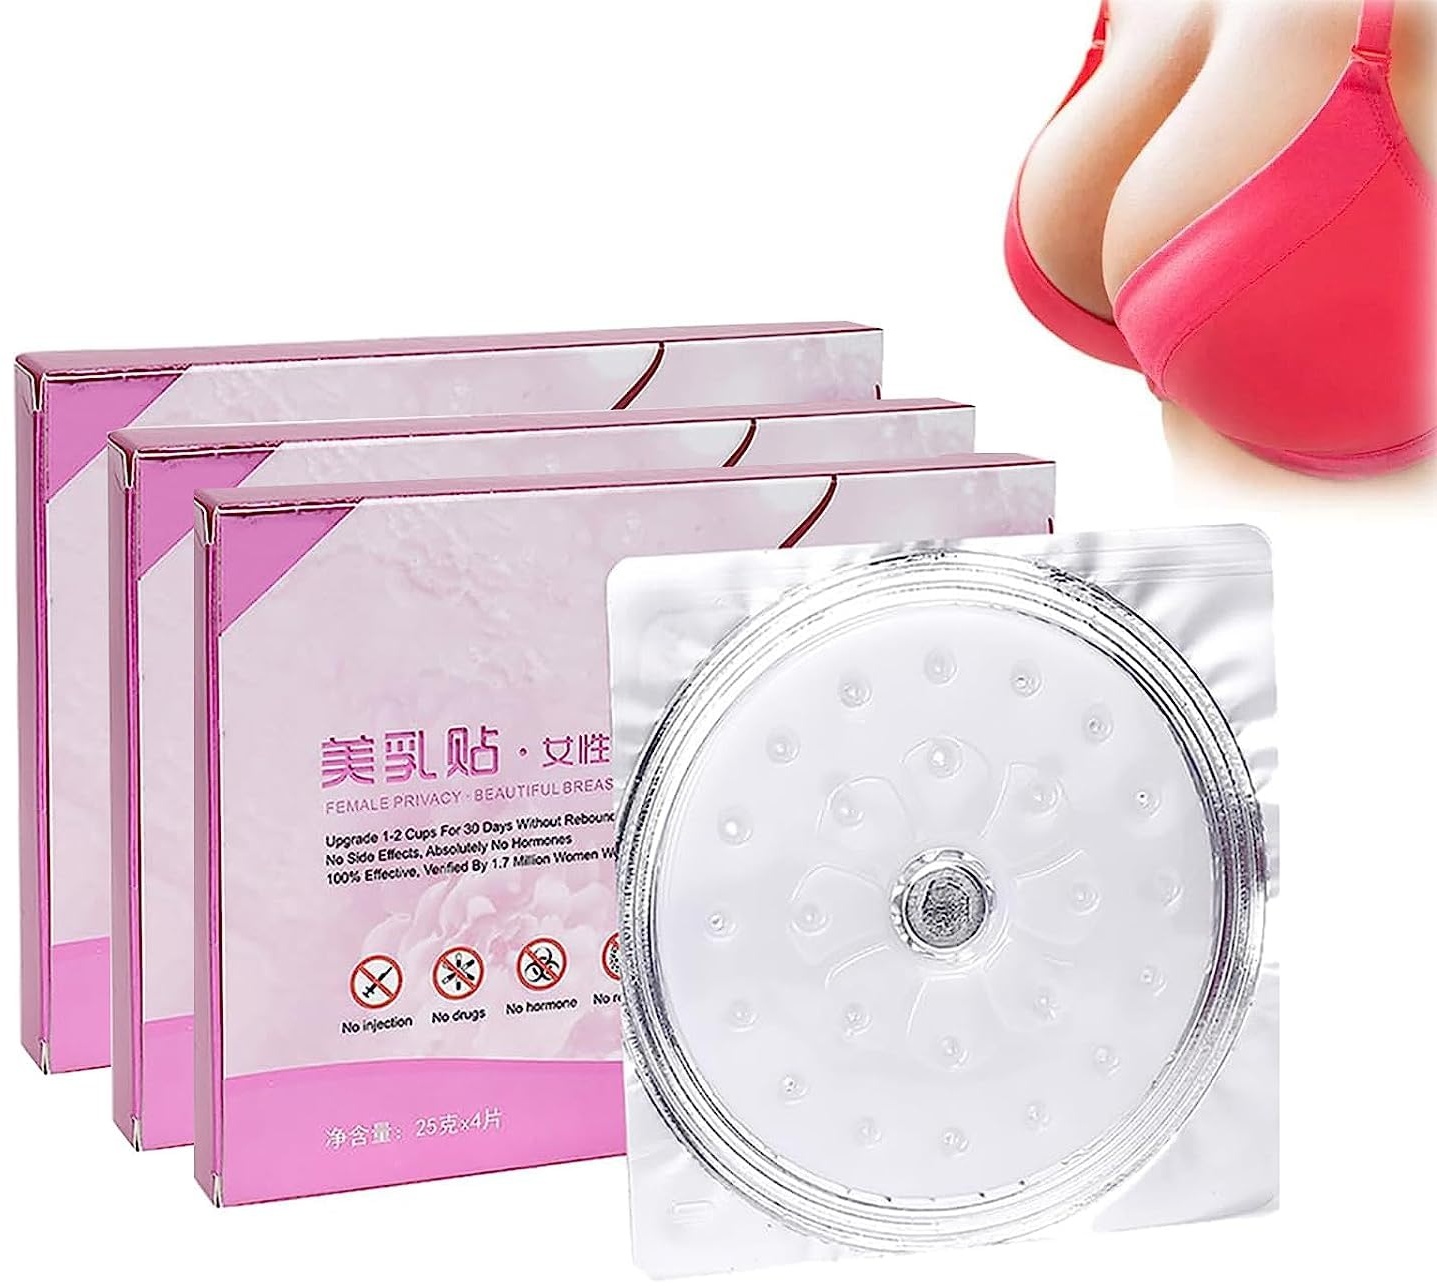 Breast Enhancement Upright Lifter Enlarger Patch, Beauty Breast Enhancement Patch, Enlargement Collagen Patch, Collagen Breast Lift Firm Mask, Breast Enlargement Enhancer Mask, Anti-Sagging (3boxes)